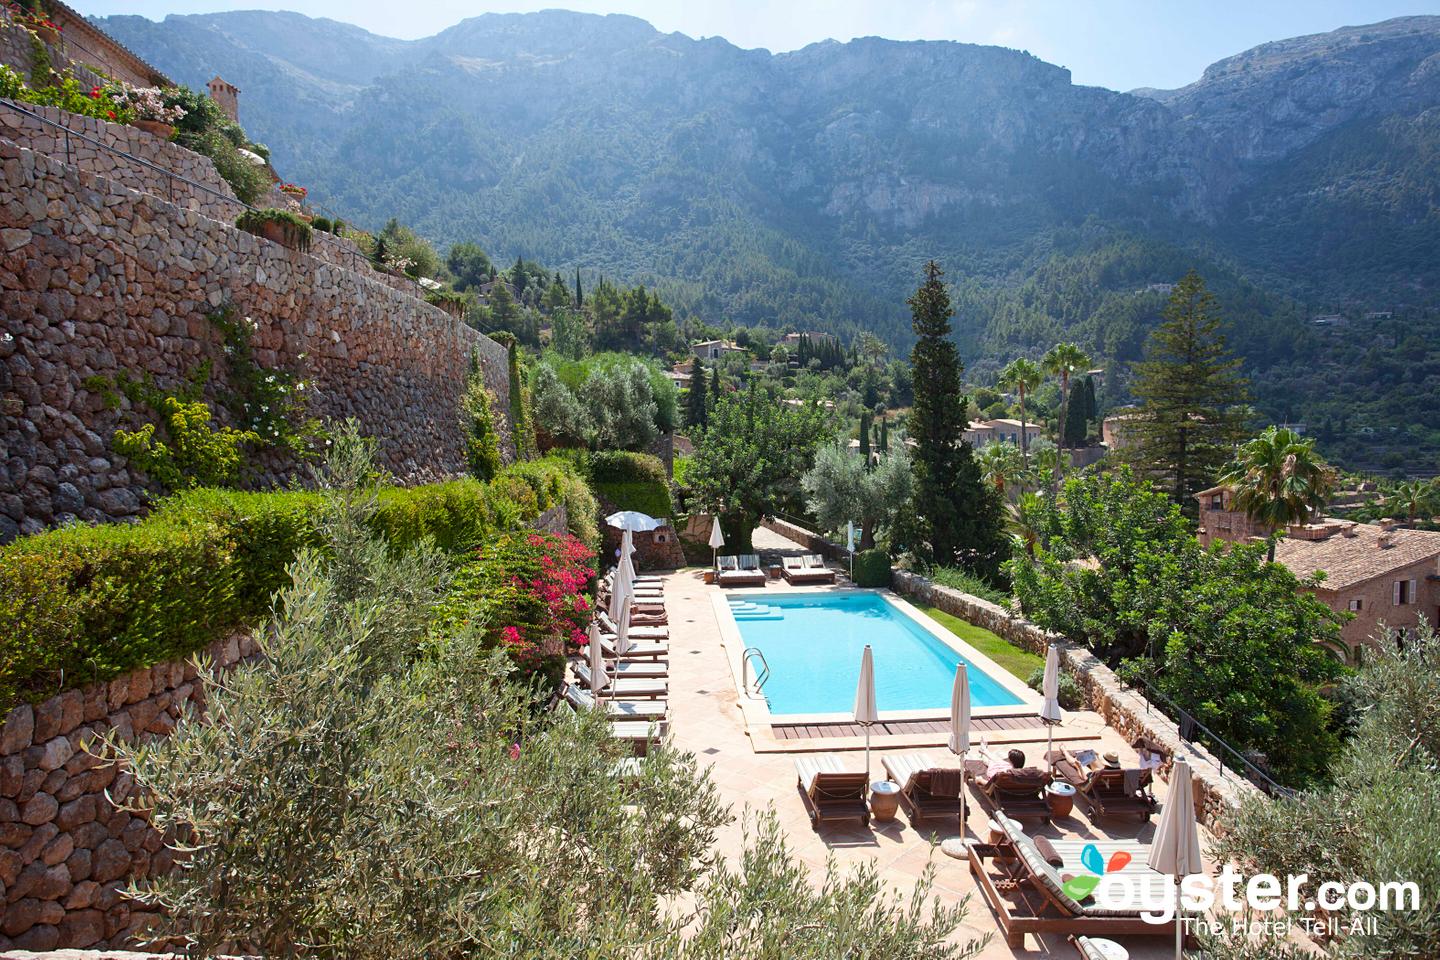 Belmond La Residencia Review - Mallorca